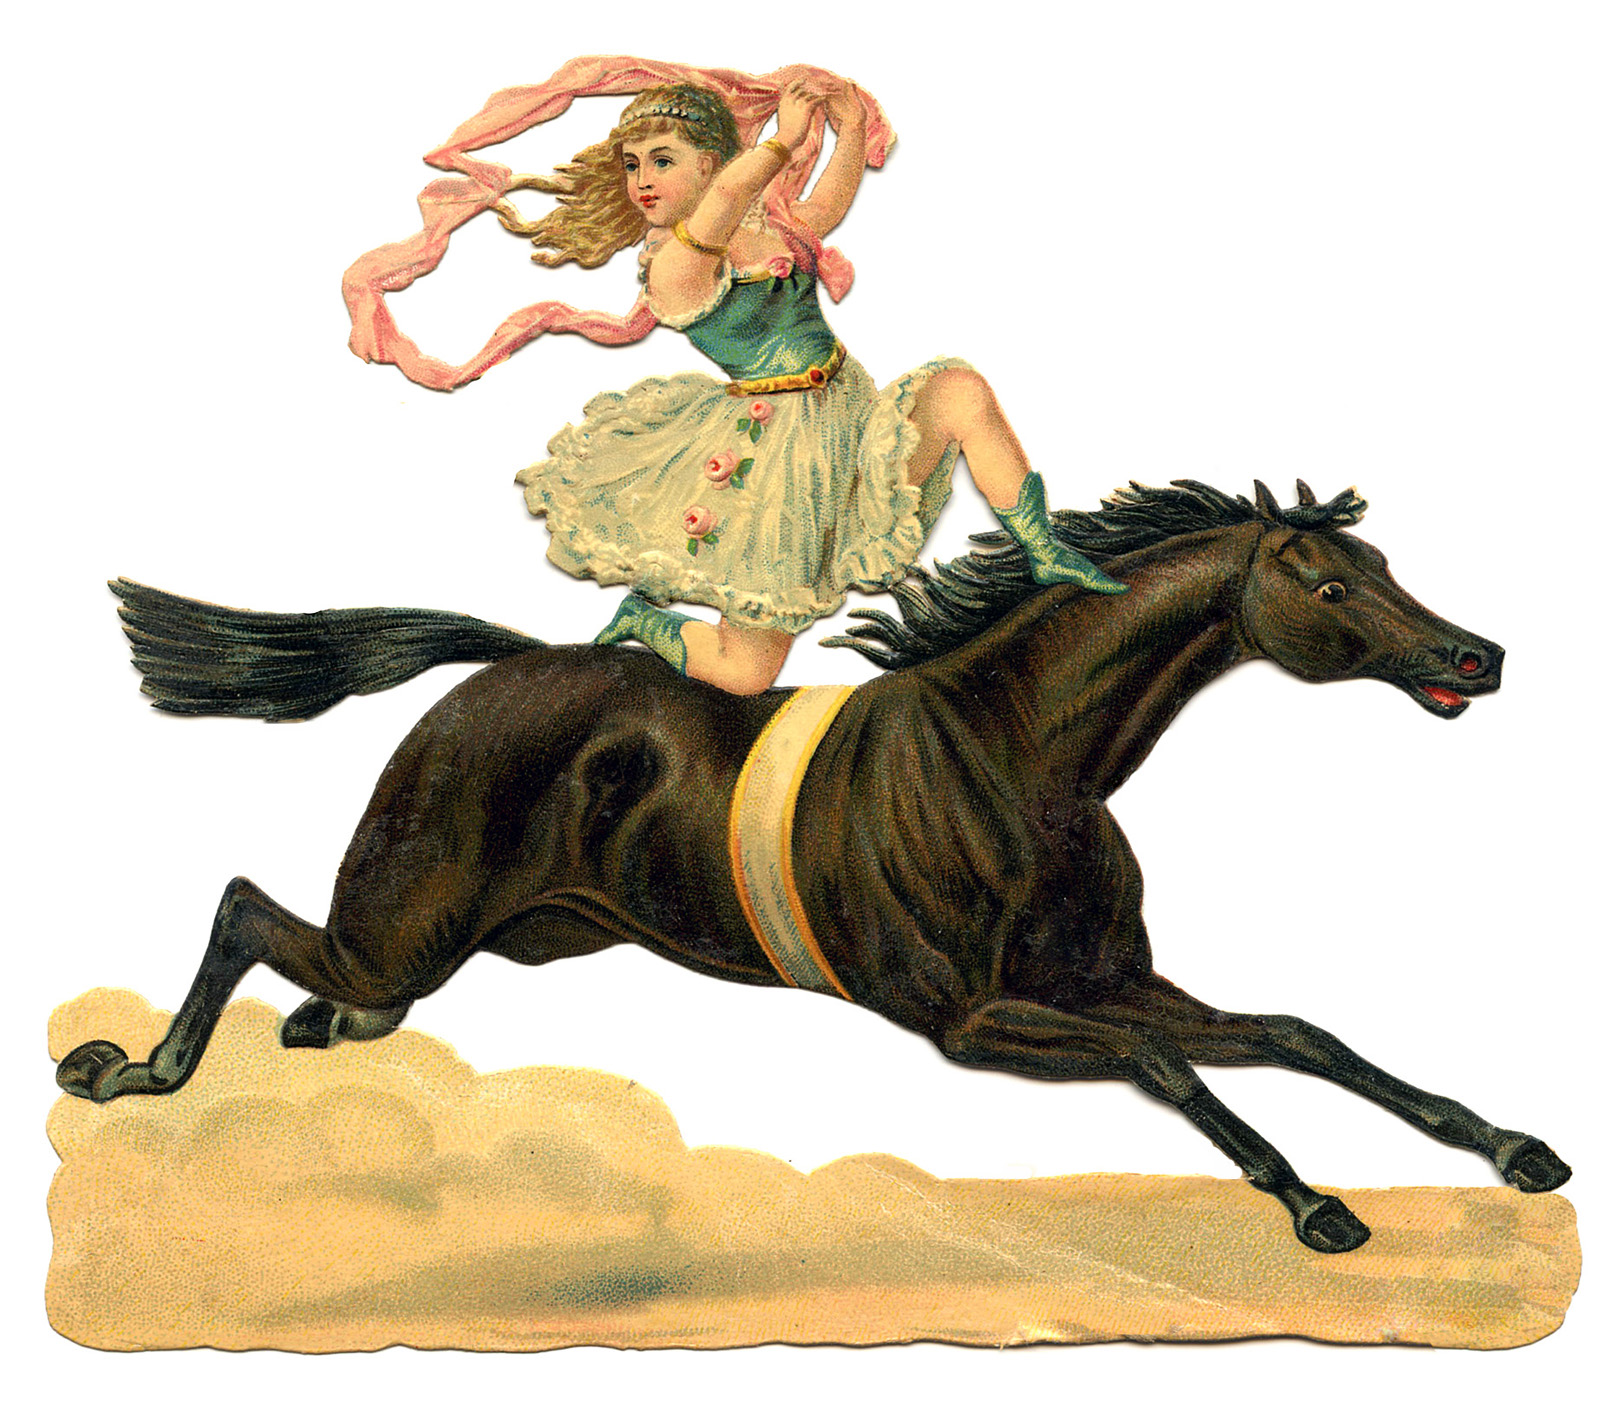     Circus Clip Art   Daring Acrobat Girl On Horse   The Graphics Fairy